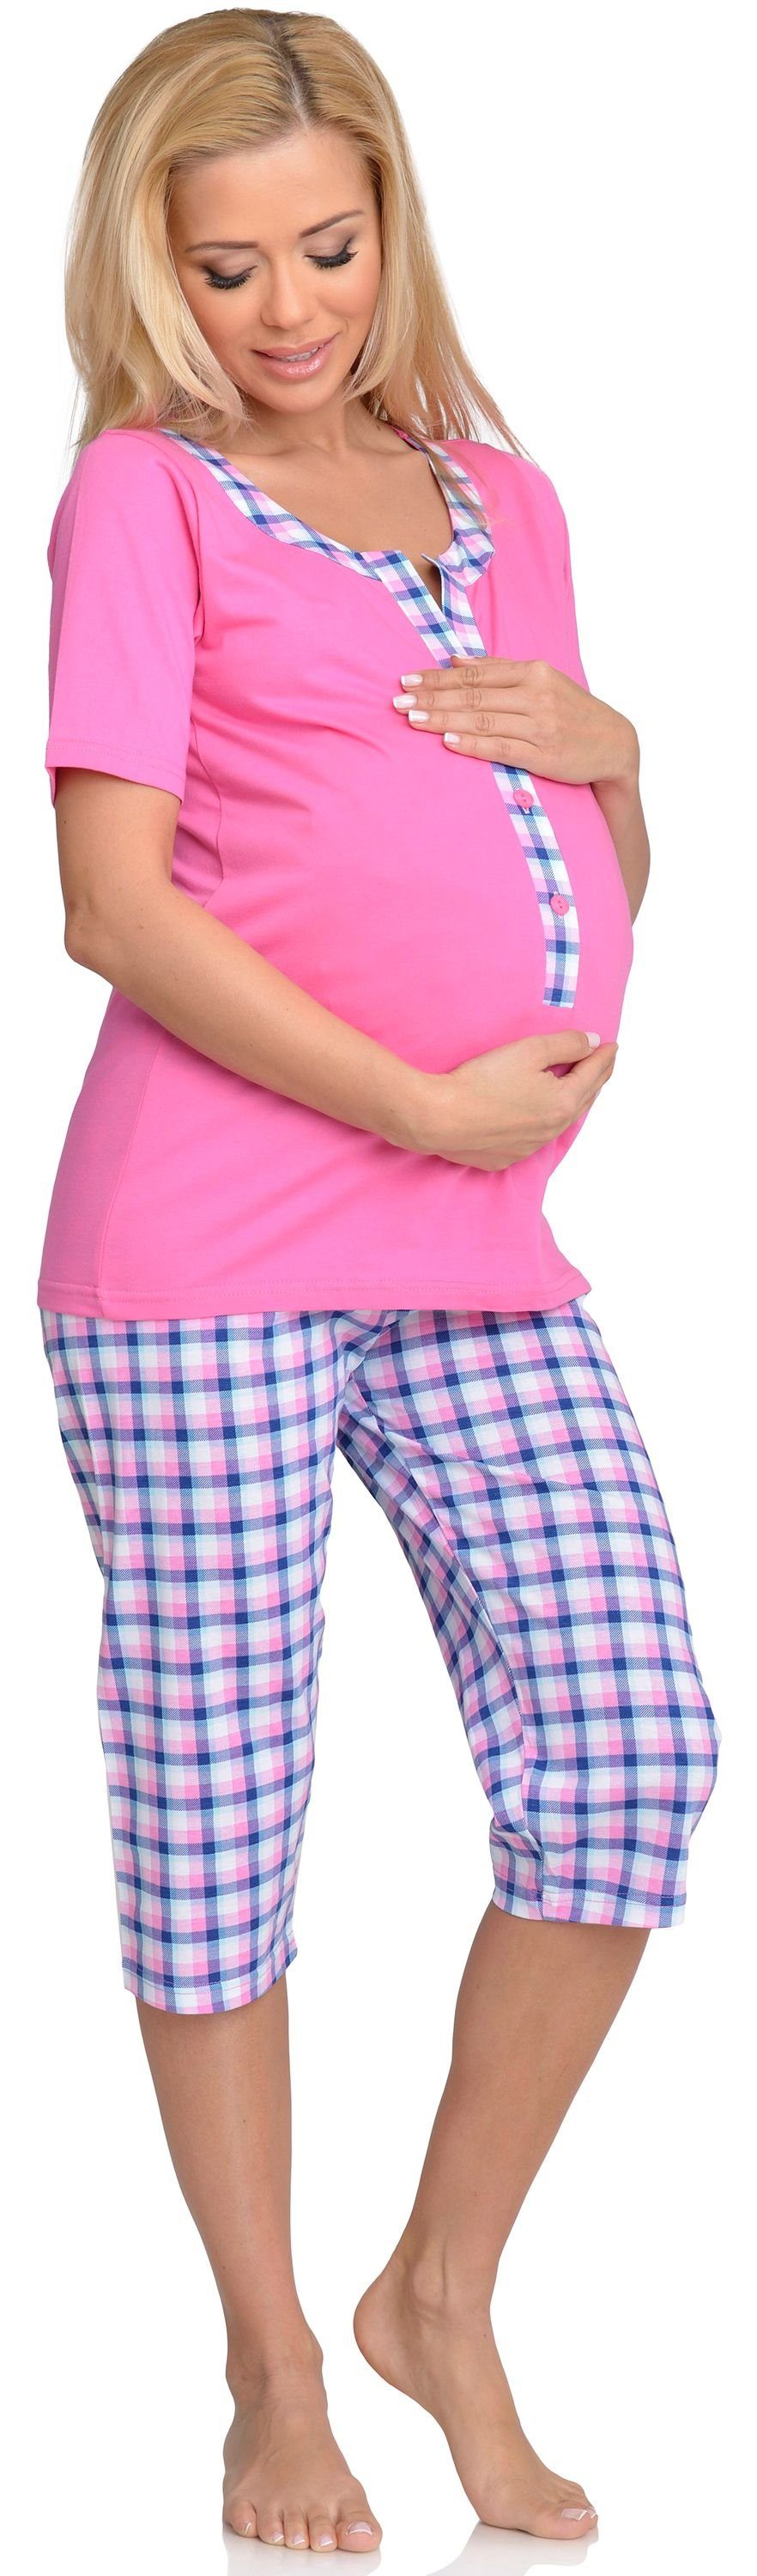 Be Umstandspyjama Damen H2L2N2 Schlafanzug Mammy Rosa-1 Stillpyjama